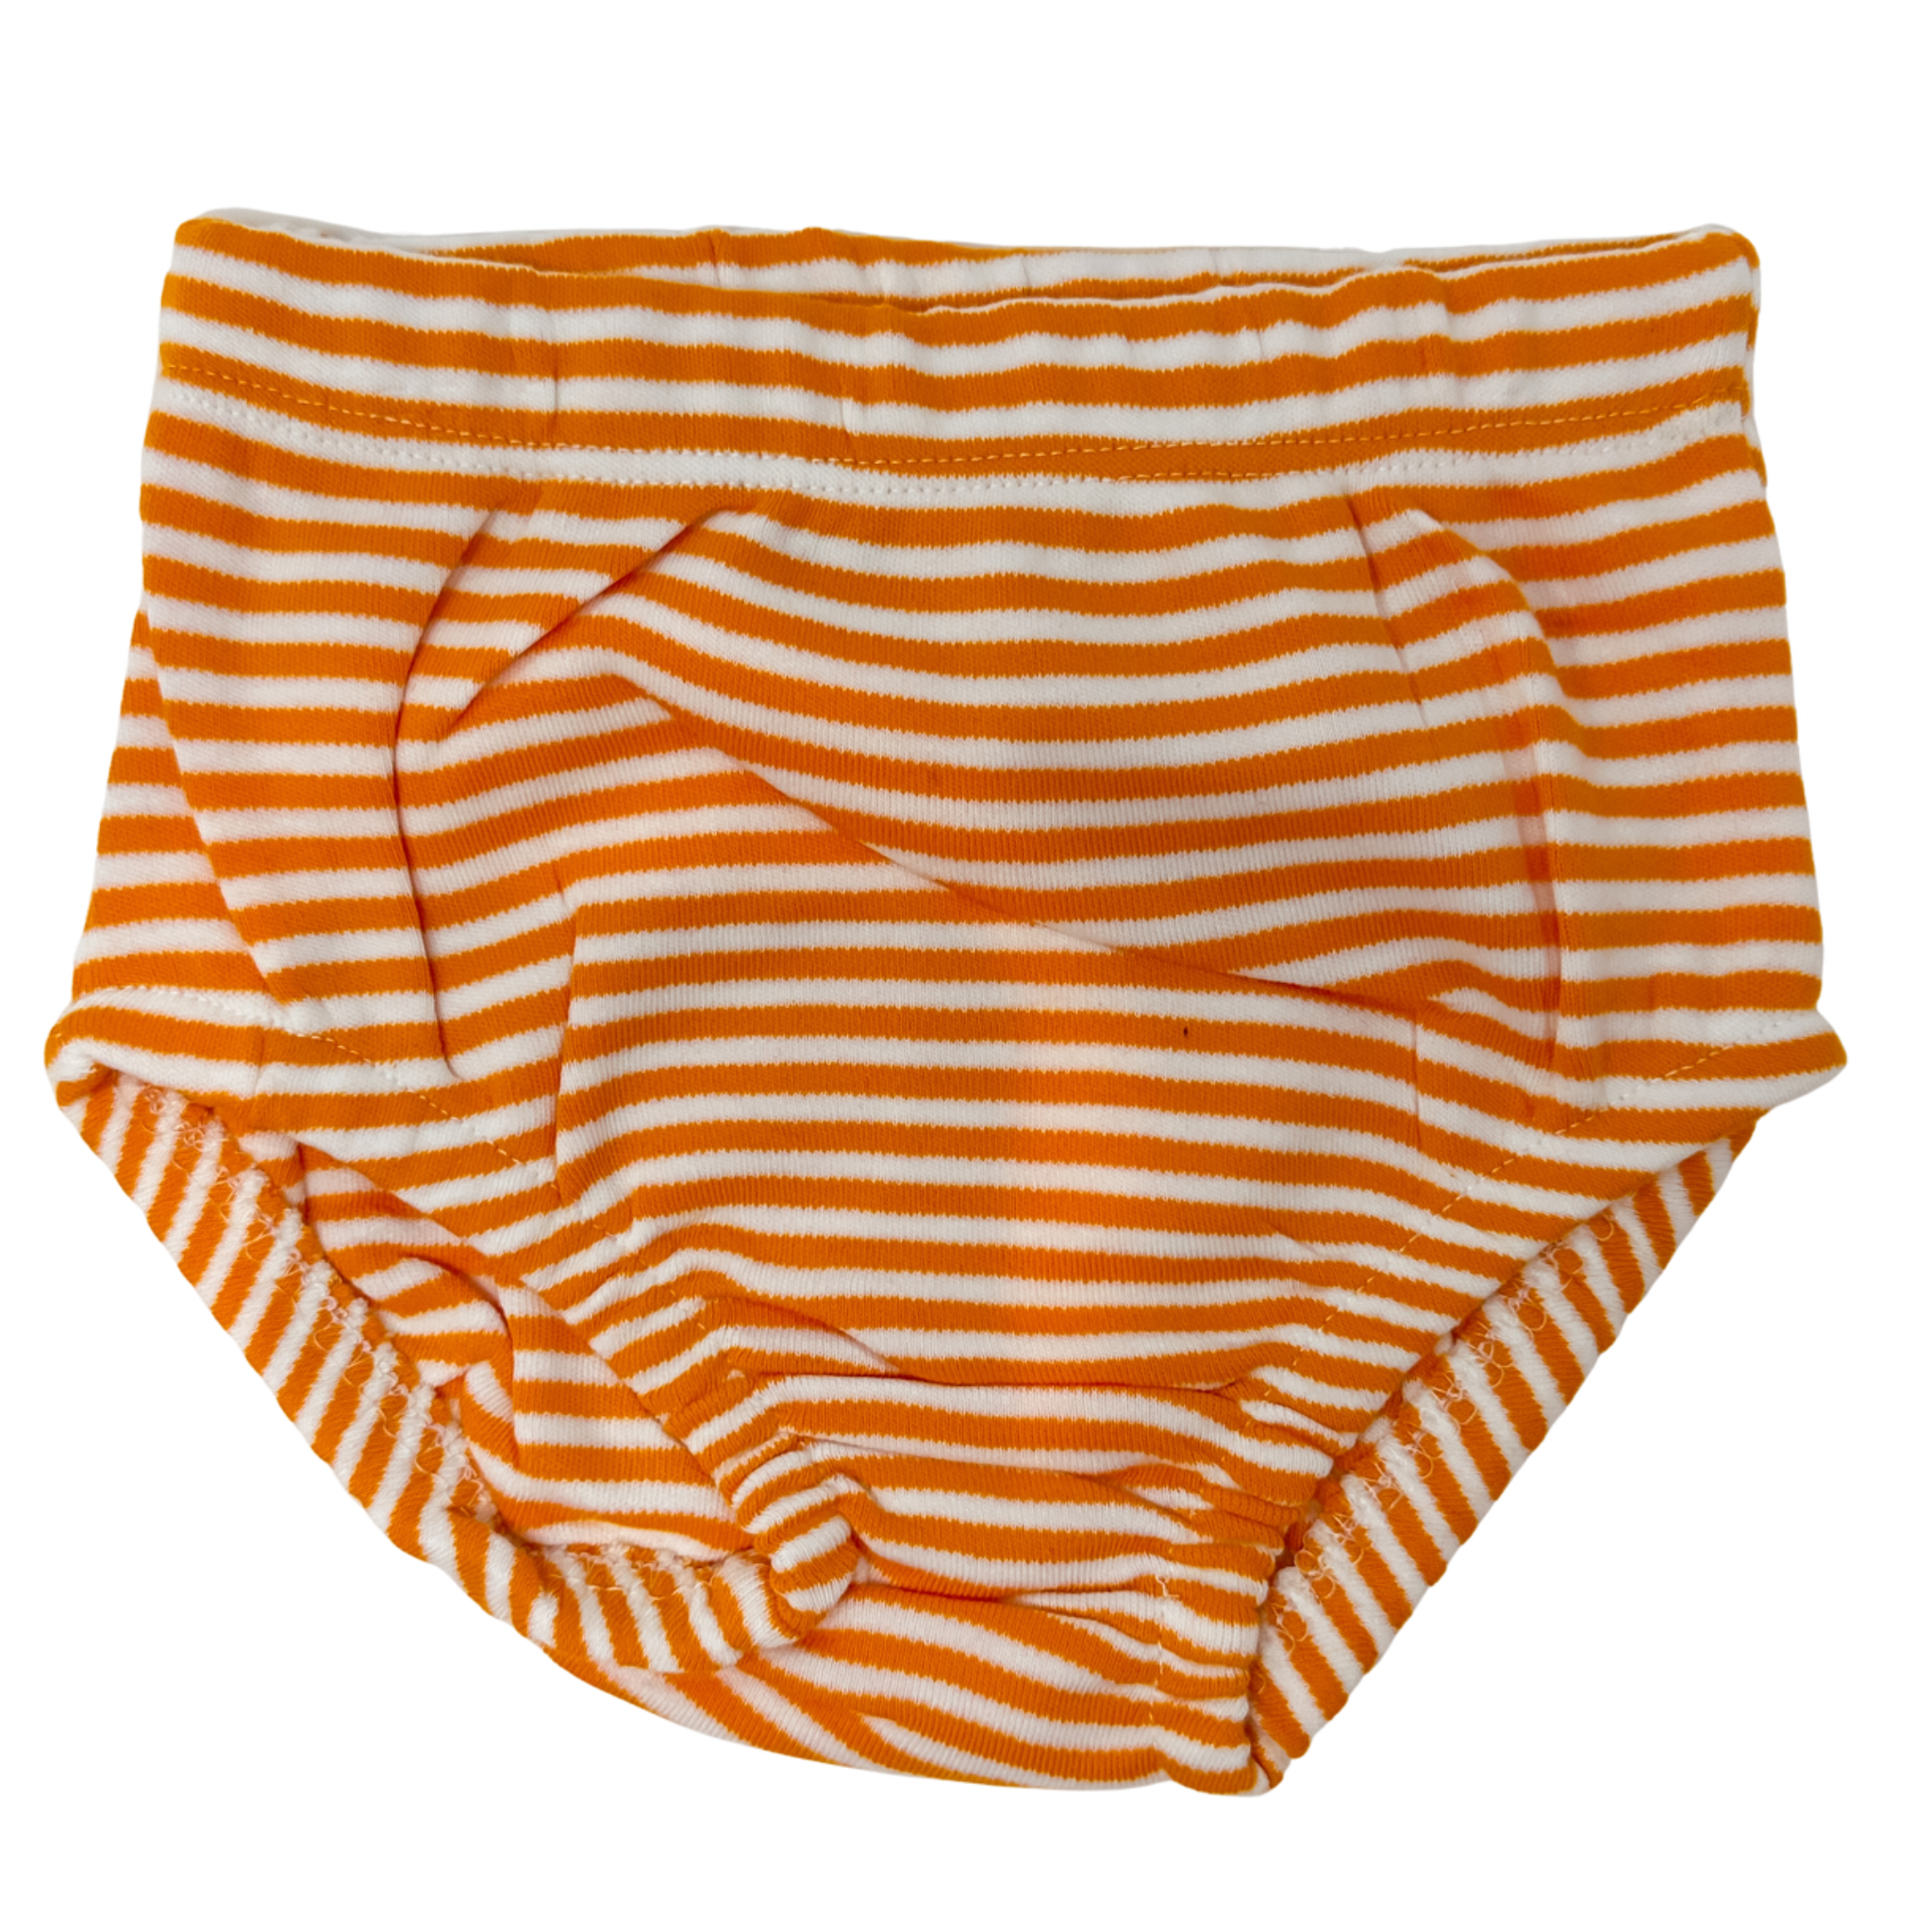 Creative Knitwear - Stripe Dress/ Bloomer - TN Orange/ White